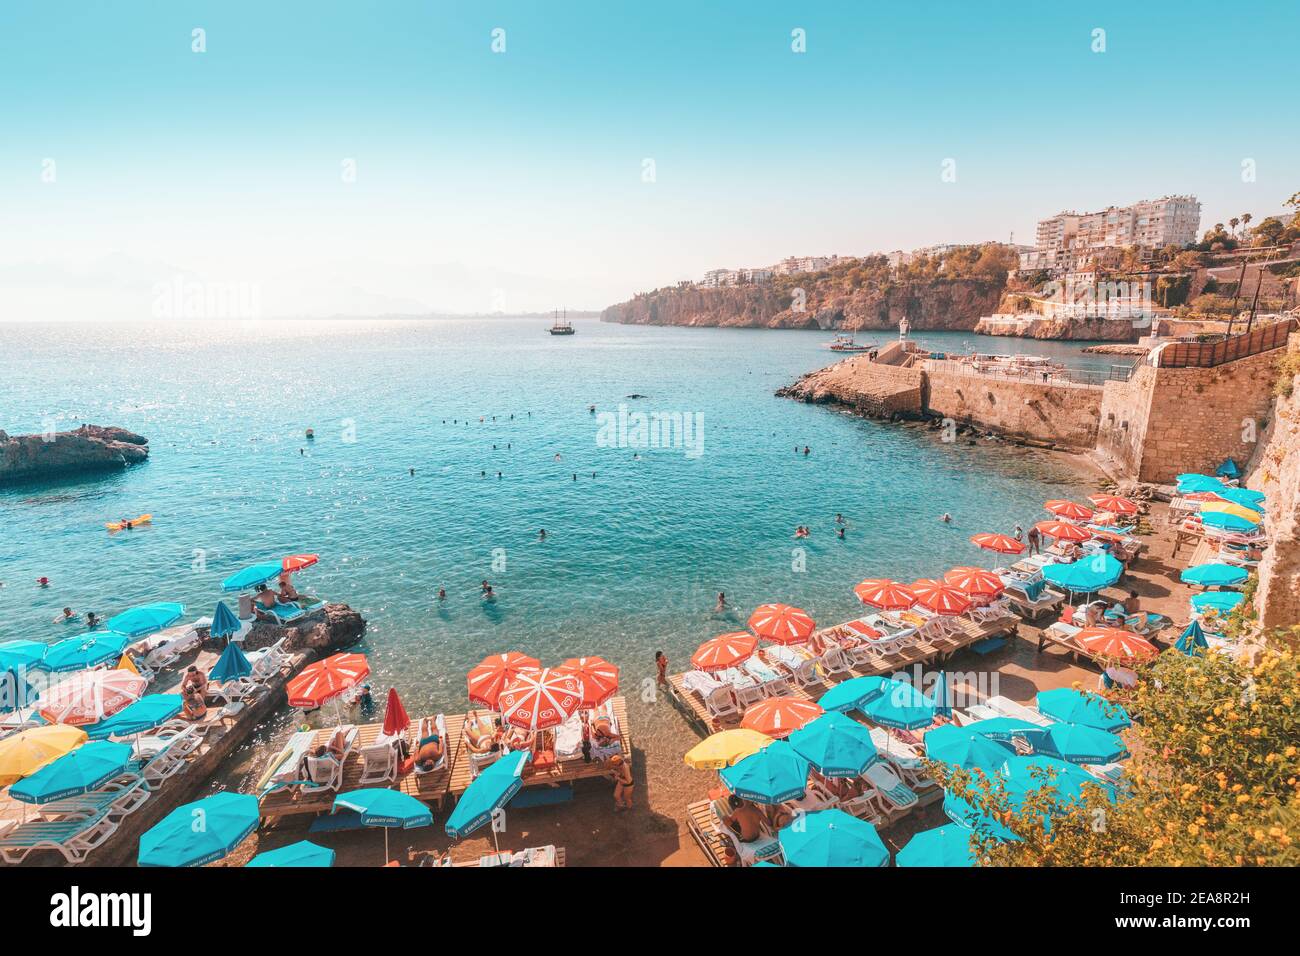 04 September 2020, Mermerli beach, Antalya, Turkey: Sunbeds and umbrellas with resting and sunbathing people in Antalya Stock Photo